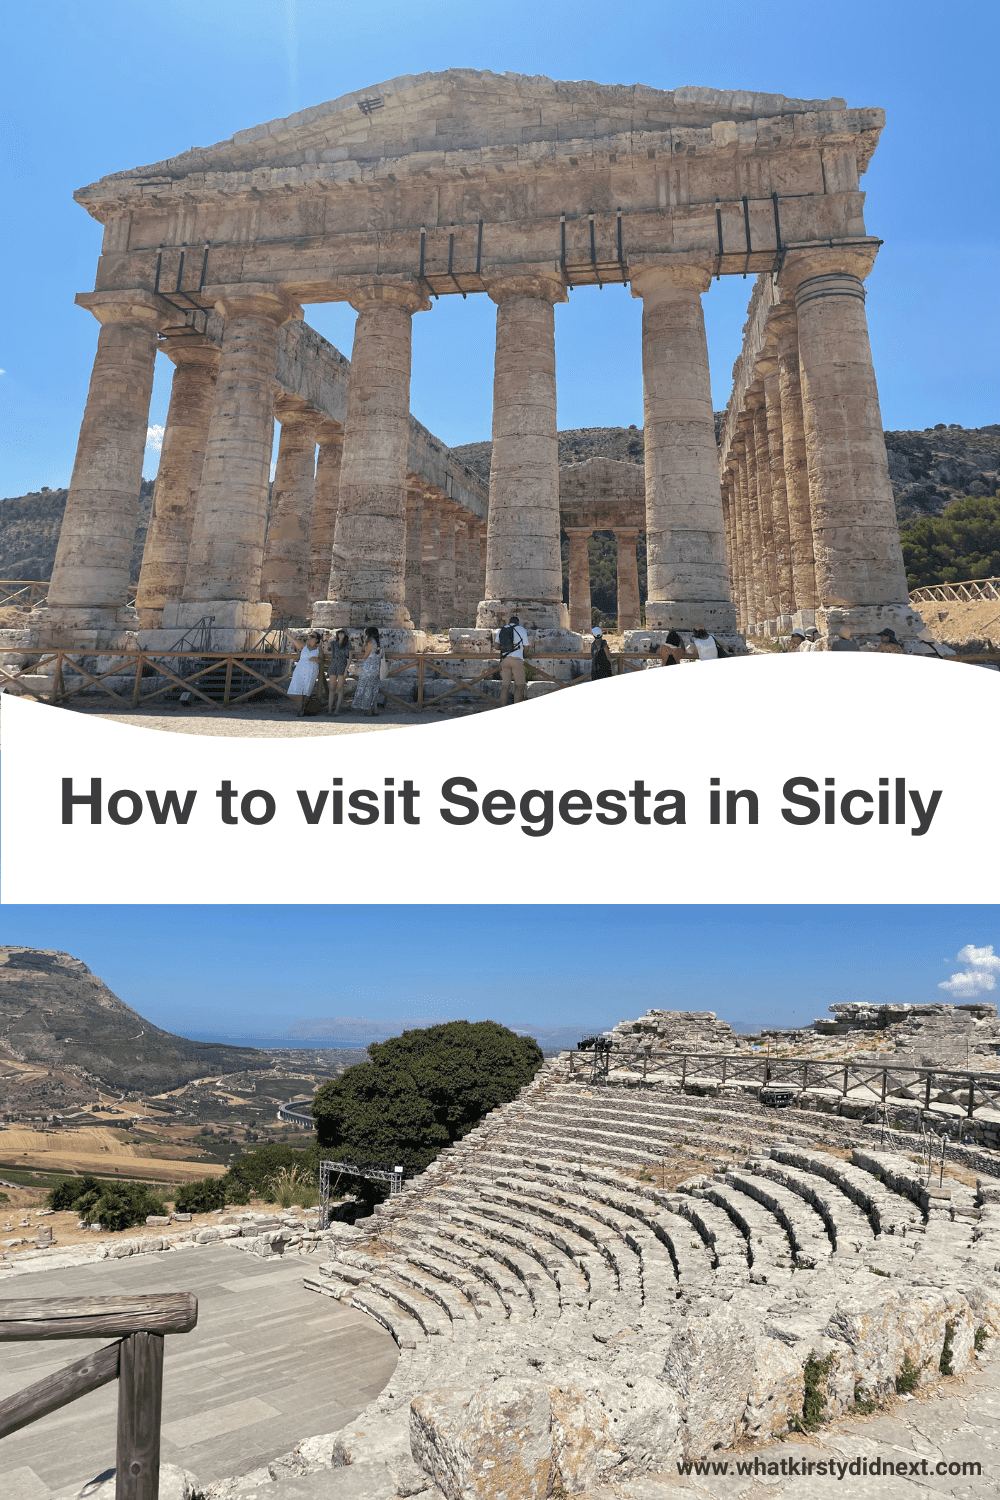 How to visit Segesta in Sicily